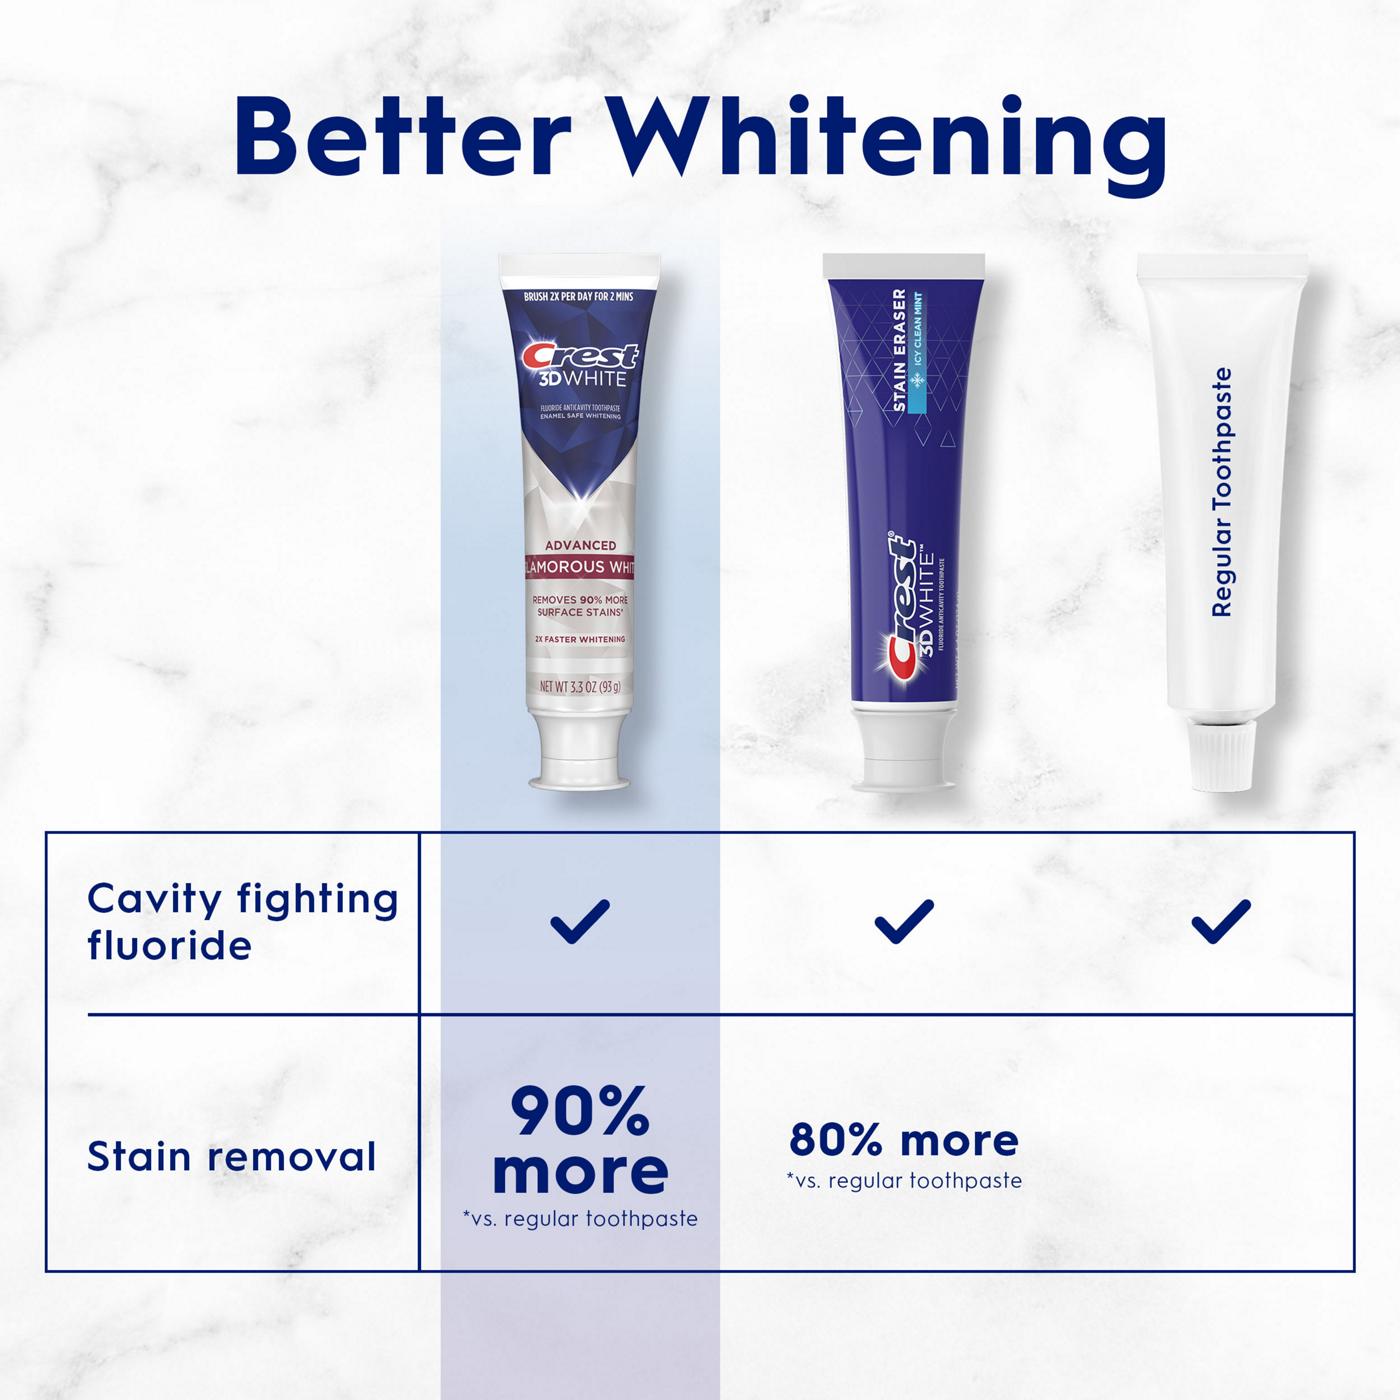 Crest 3D White Whitening Toothpaste - Glamorous White; image 5 of 8